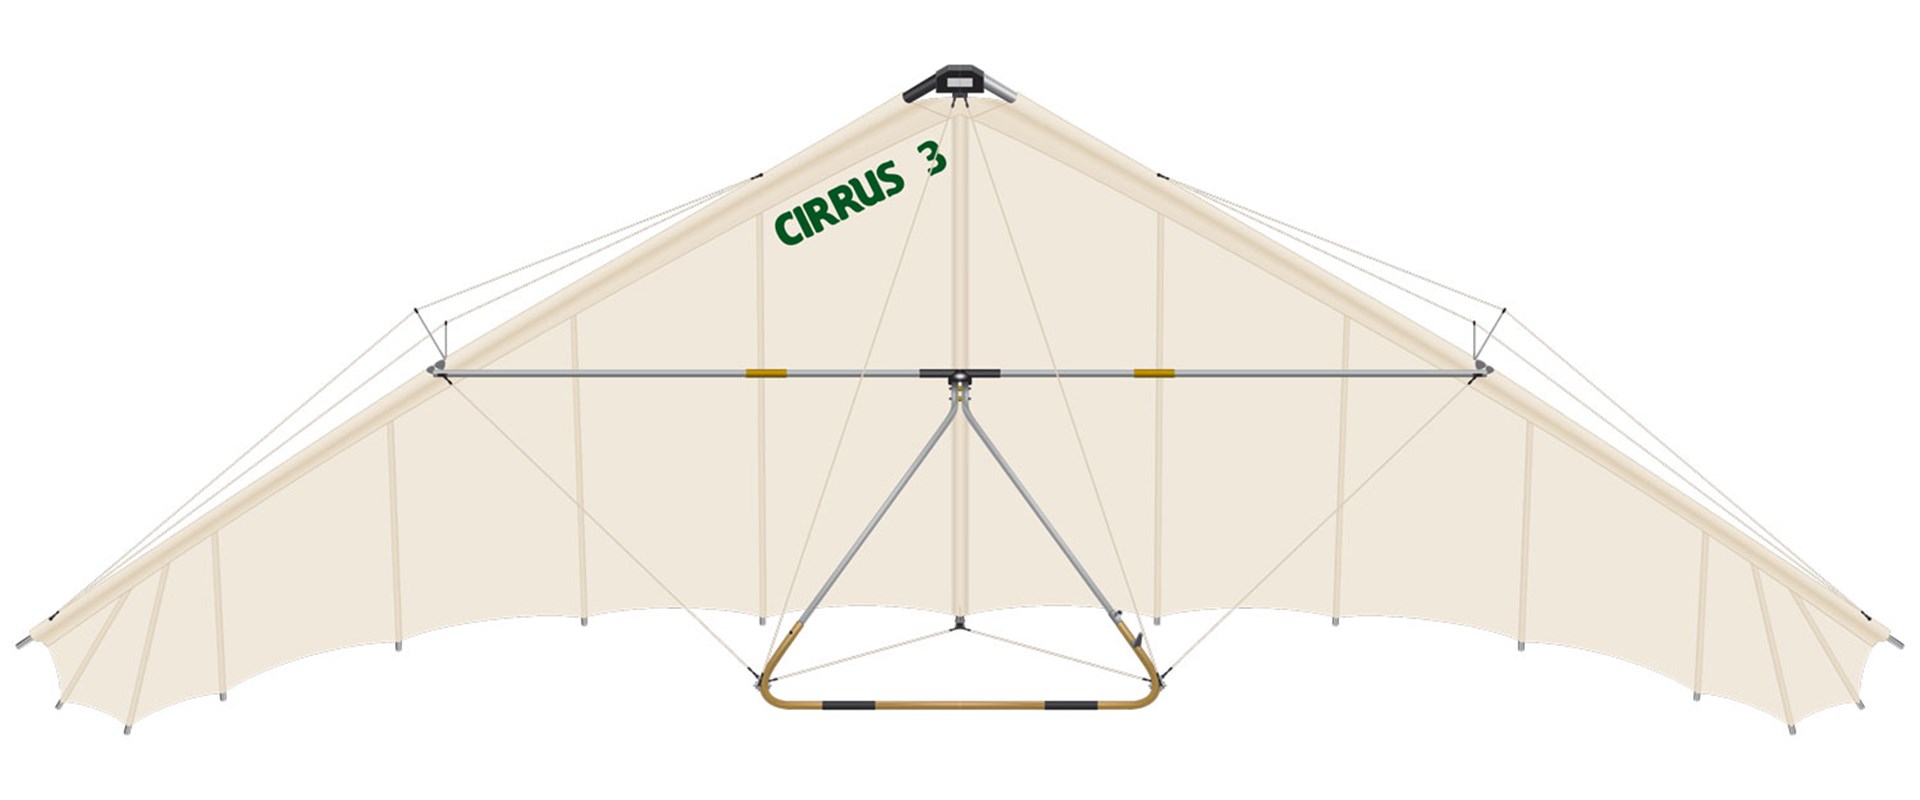 Scot-Kites Cirrus III hang glider.